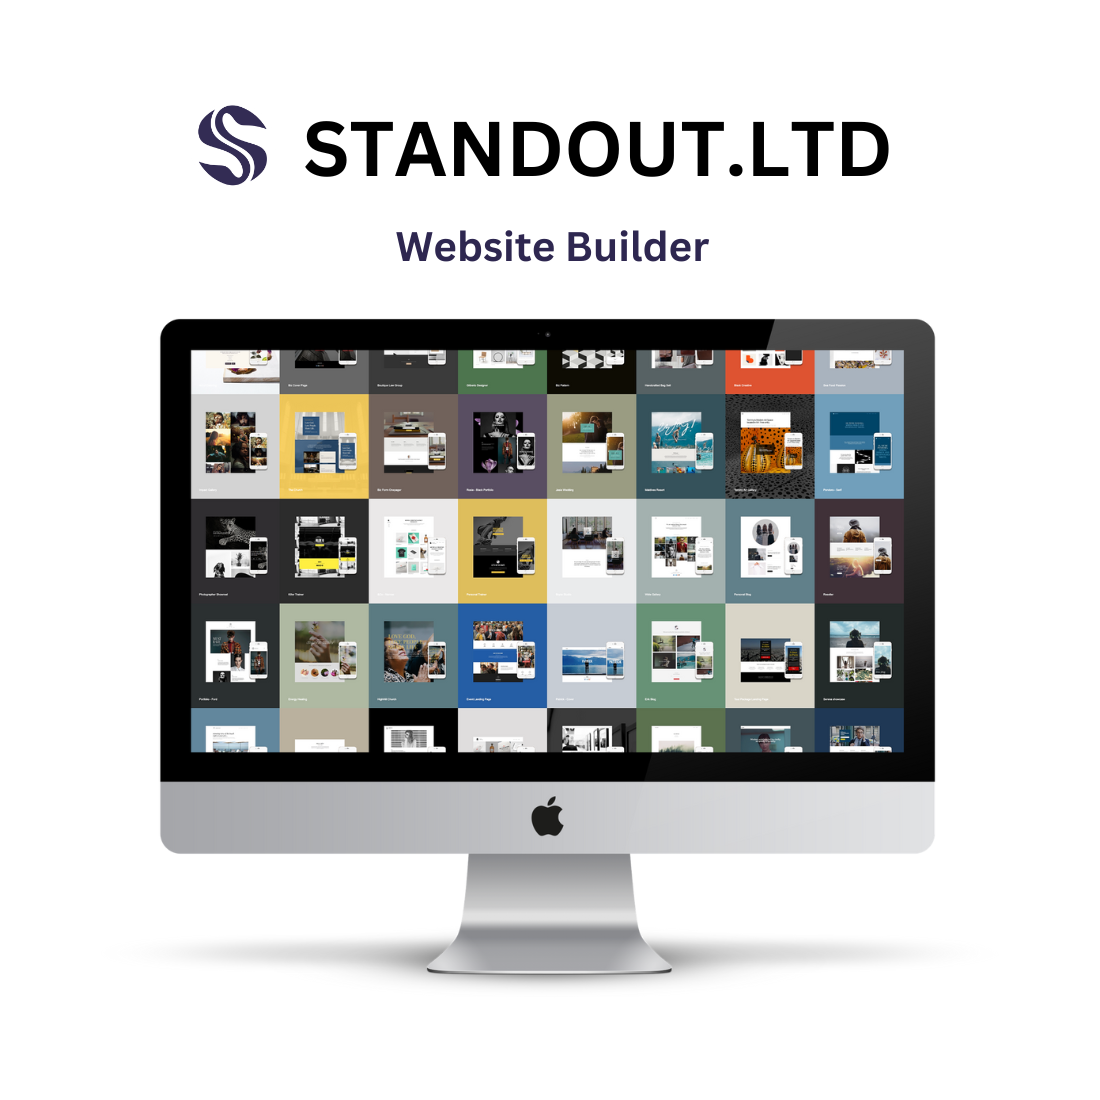 Website Builder Agency License cover image.